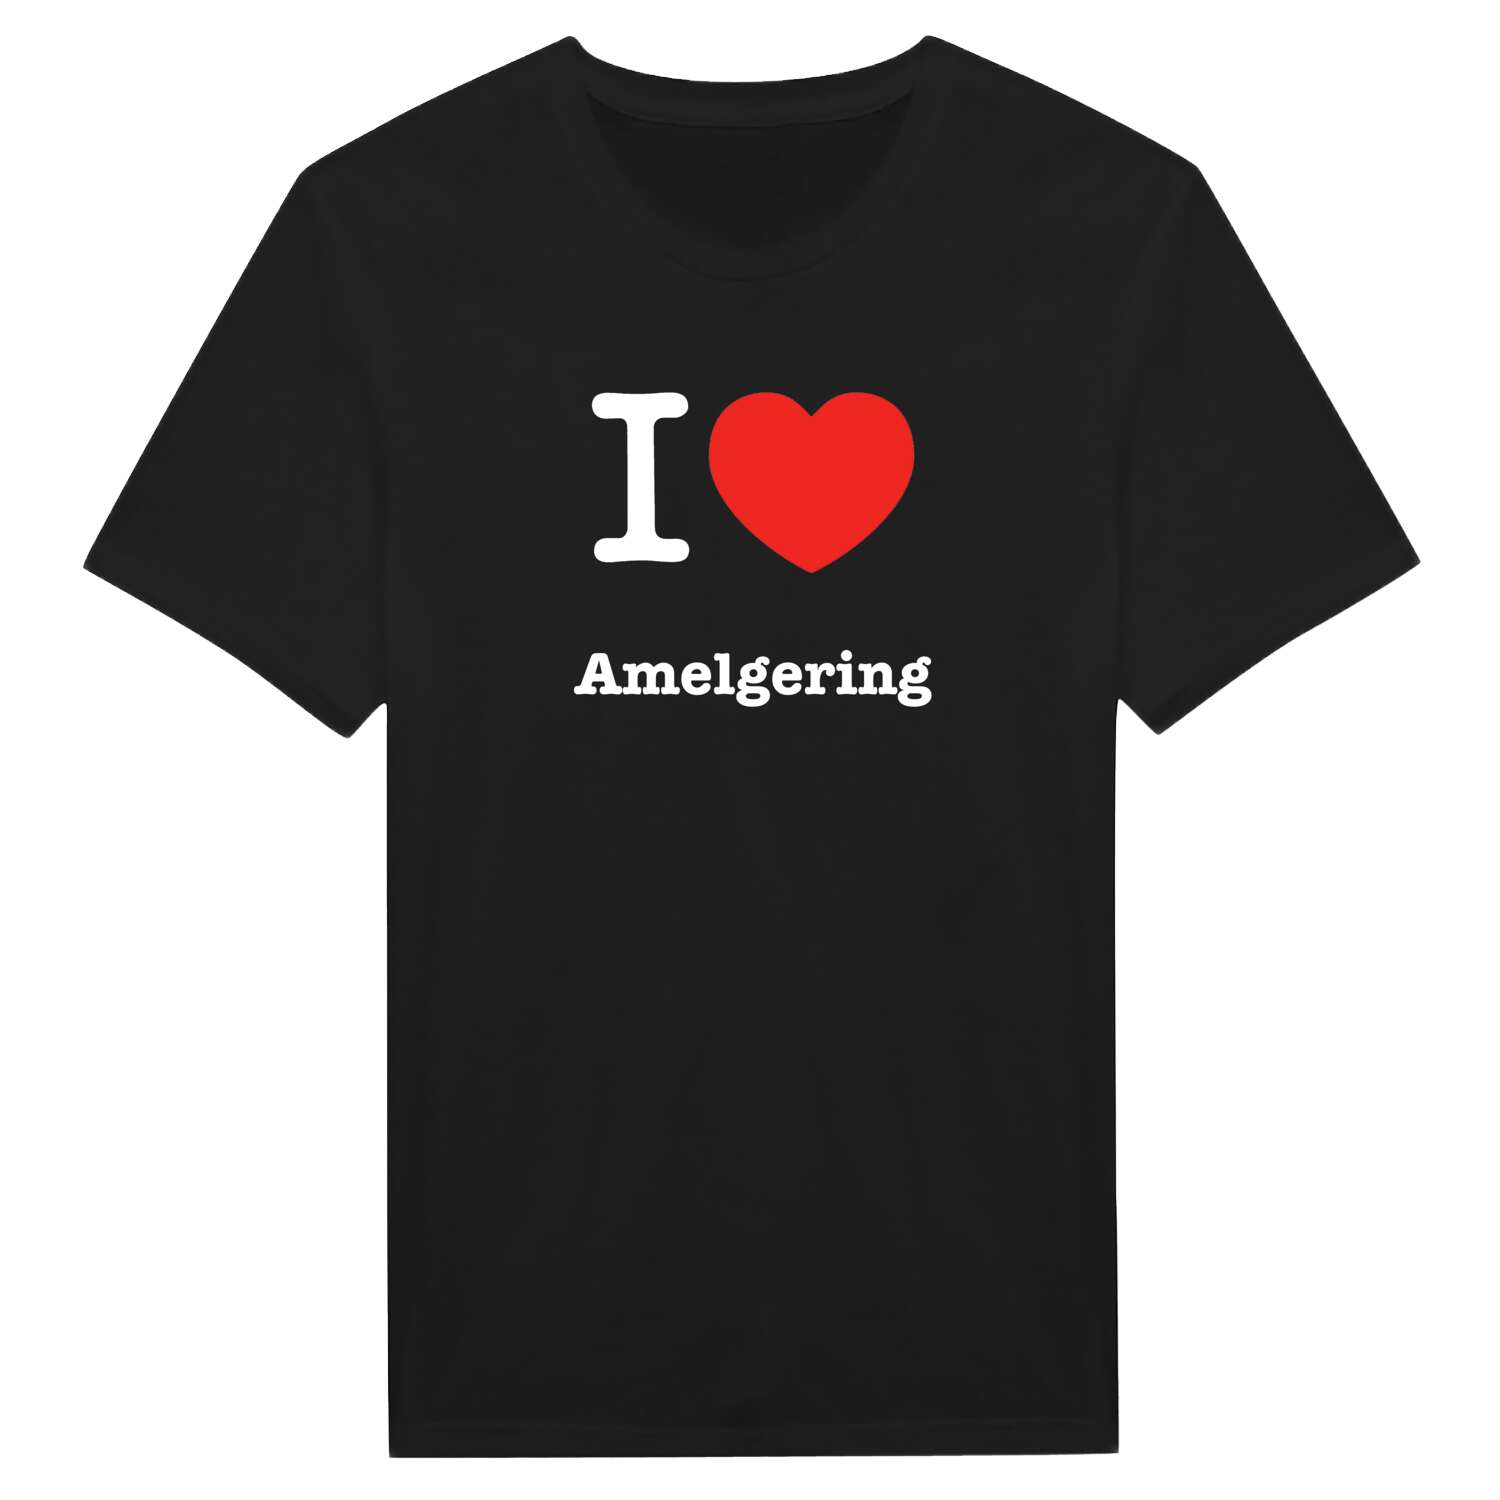 Amelgering T-Shirt »I love«